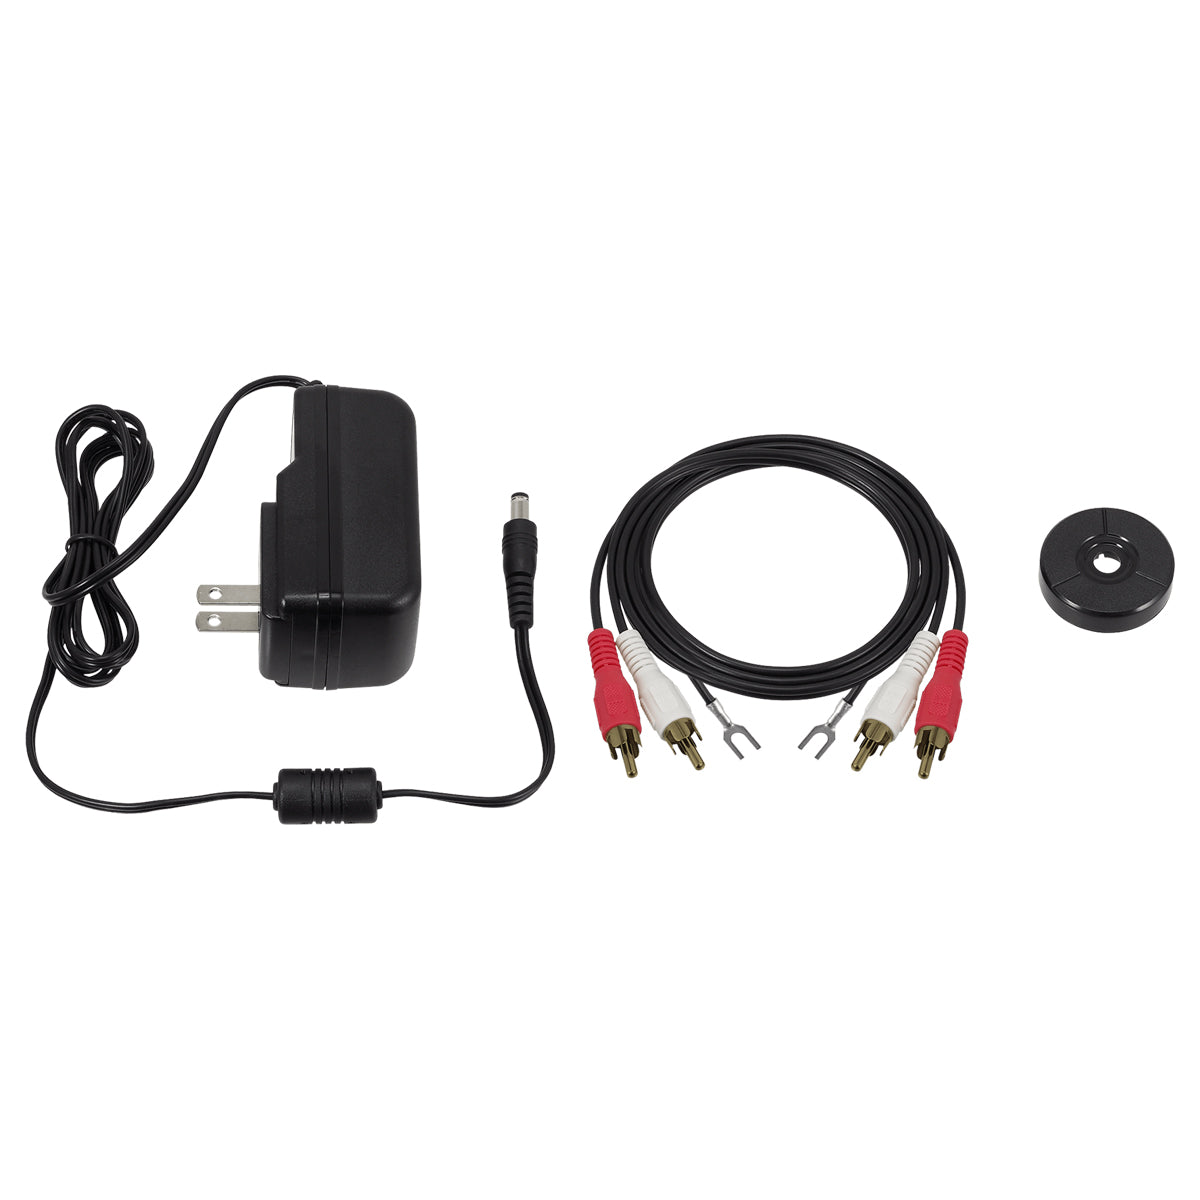 Audio Technica AT-LP120xBT-USB - Black - The Audio Experts